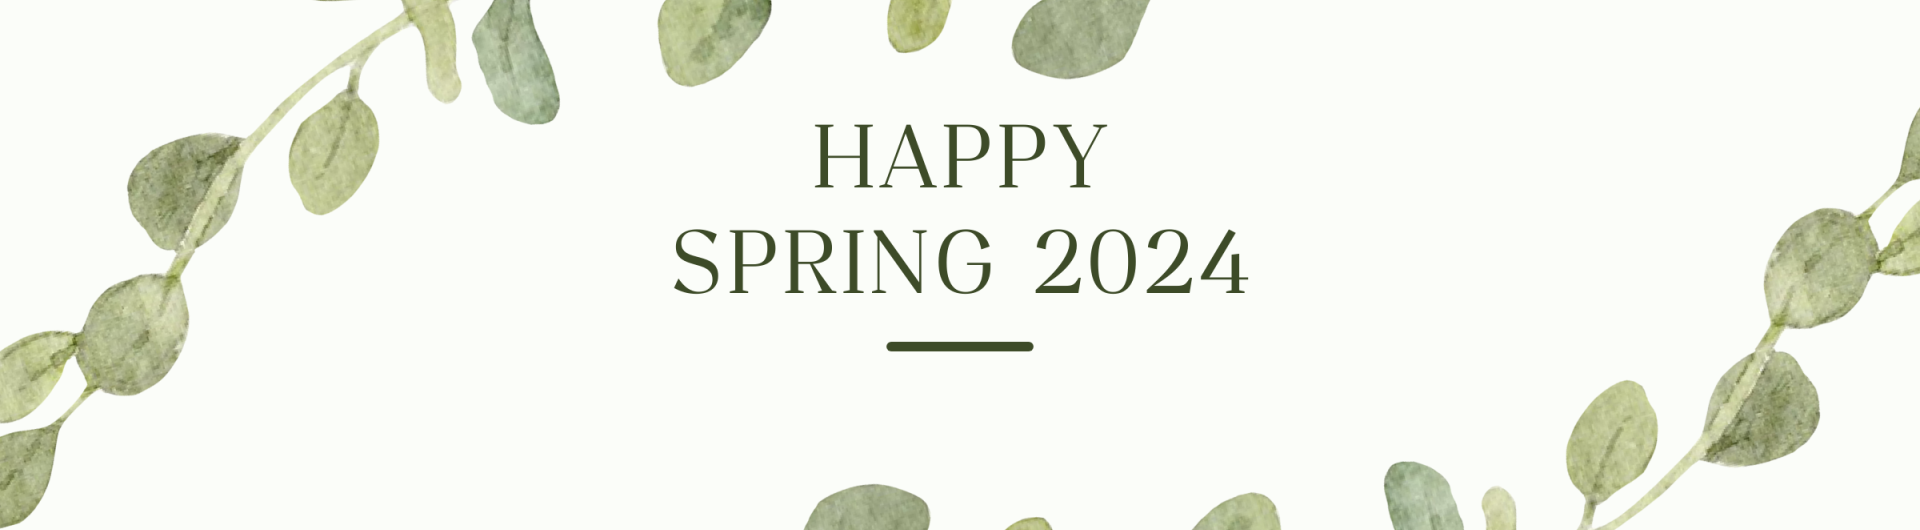 Happy Spring 2024 - Banner